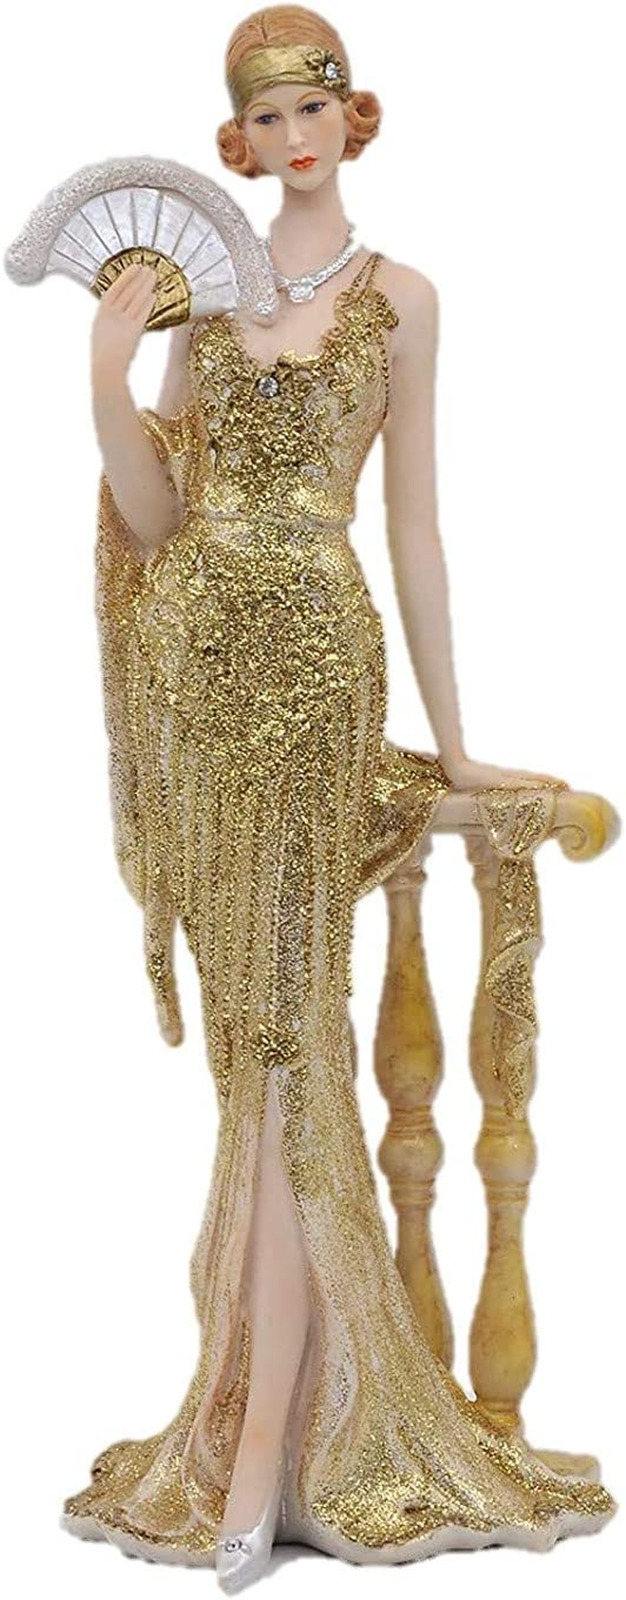 13″ Polyresin Glamorous Elegant Victorian Style Luxury Lady with Fan Figurine